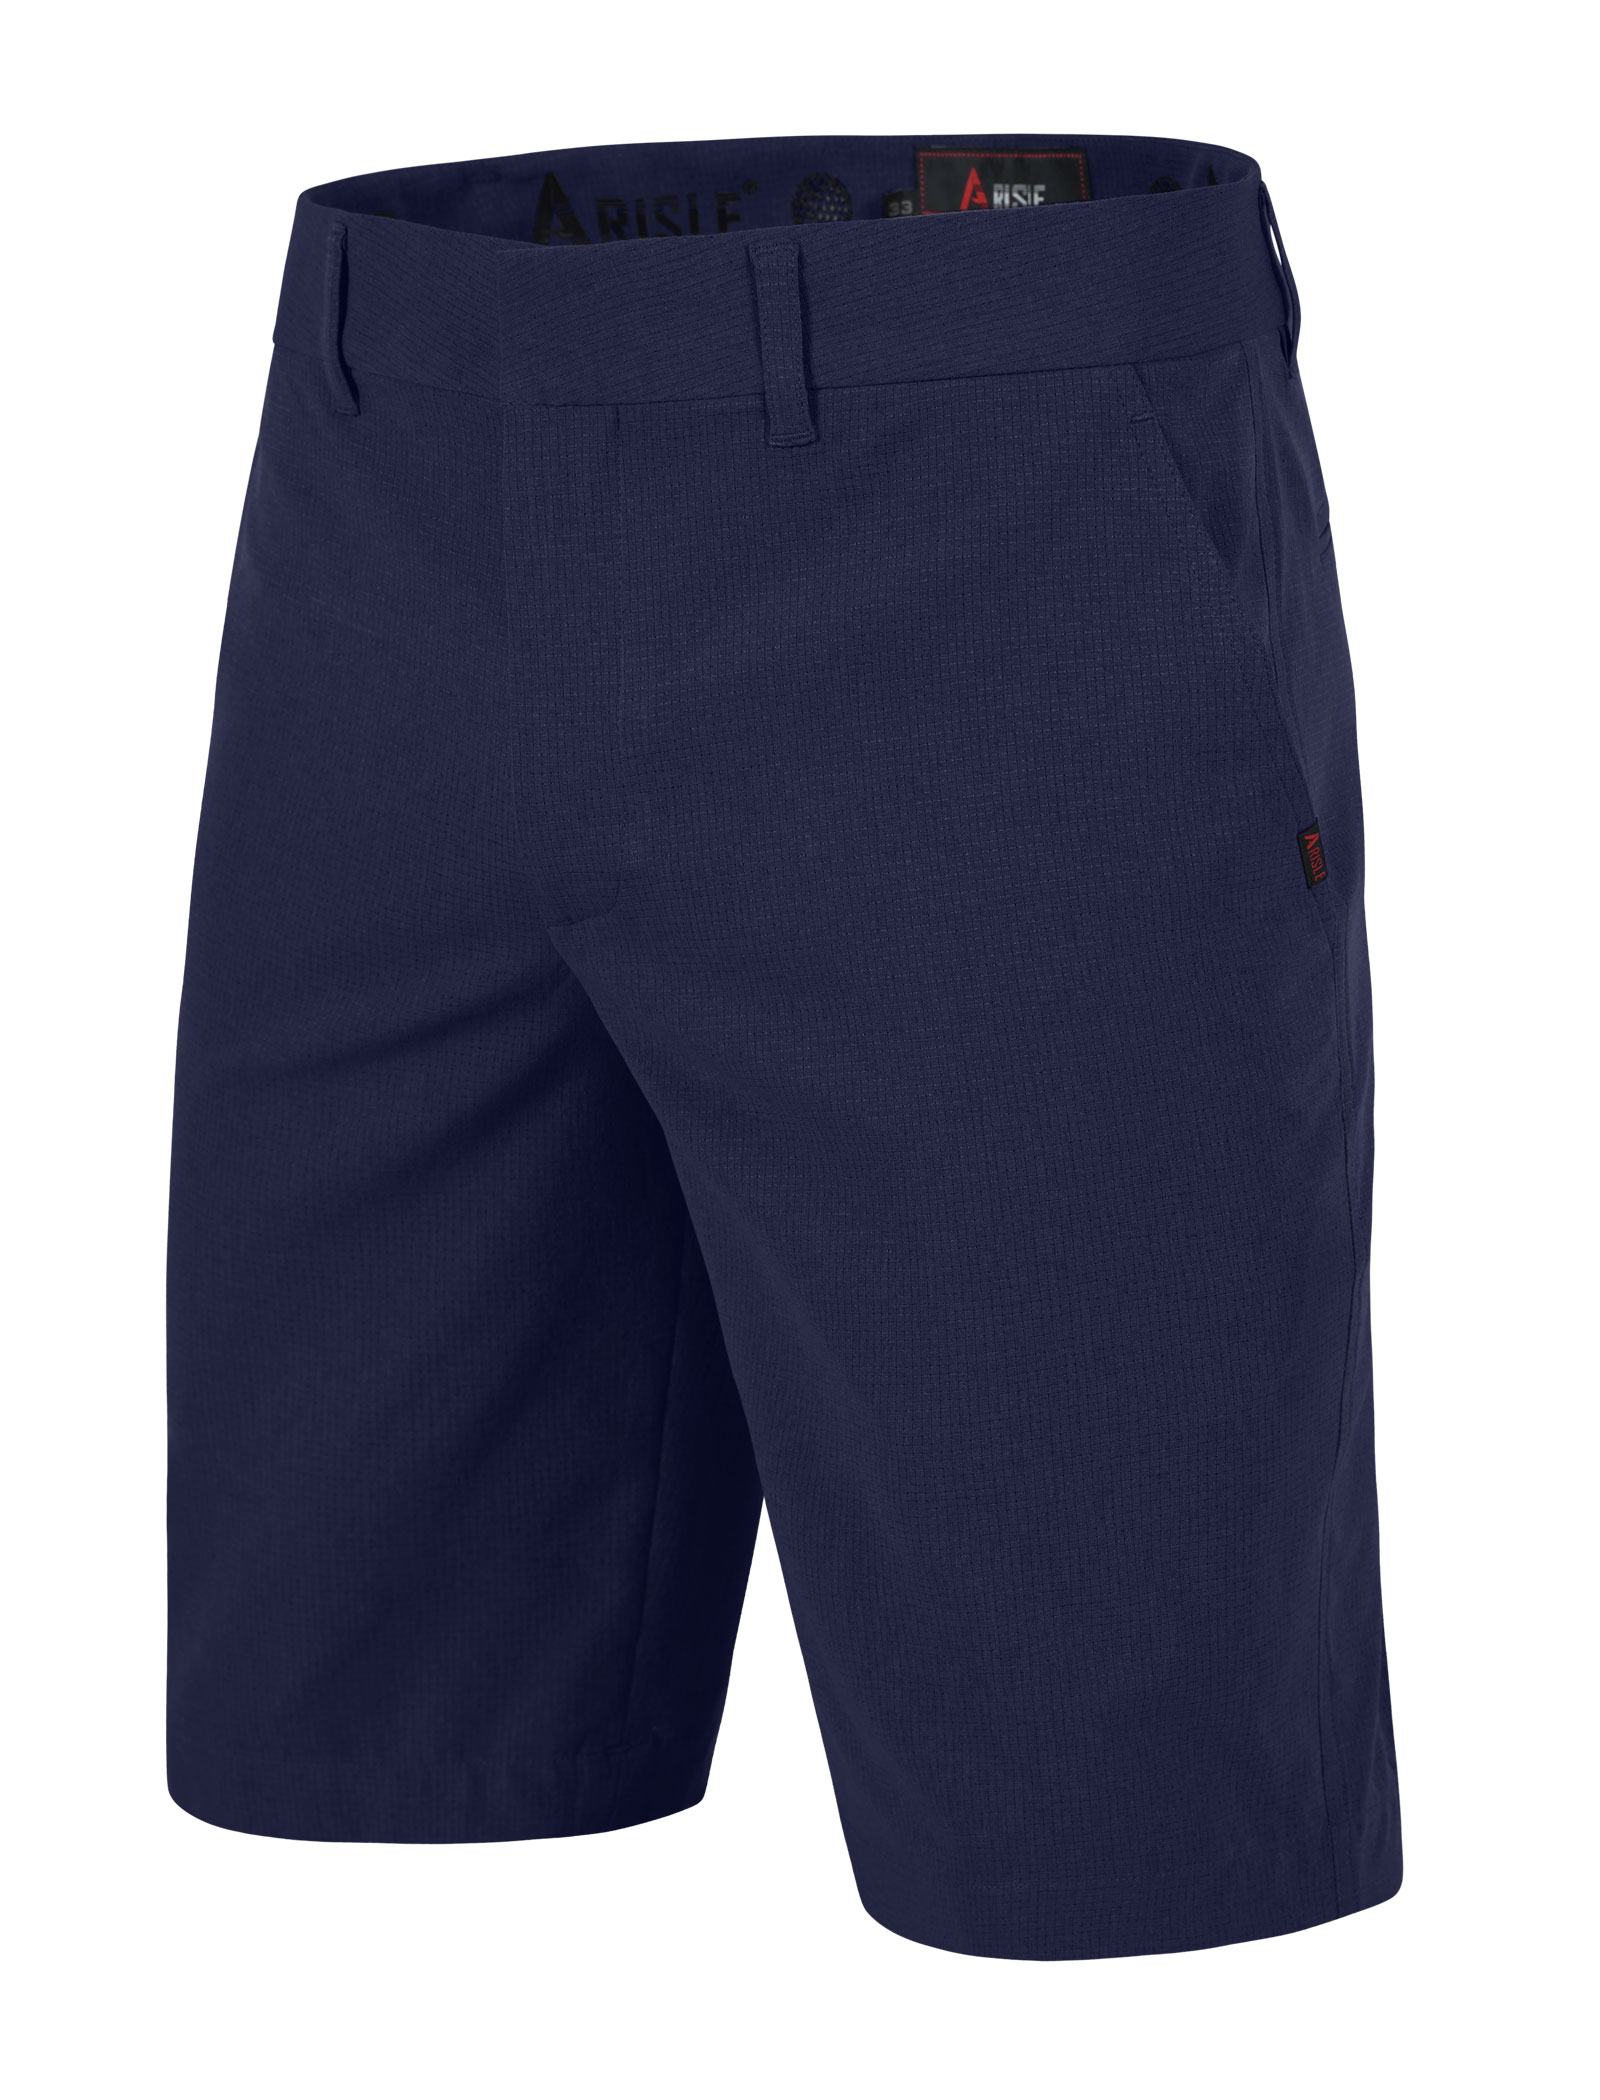 QuYn-Shorts-Golf-Arisle-Square-knot-Ventcool-Dark-Blue_1